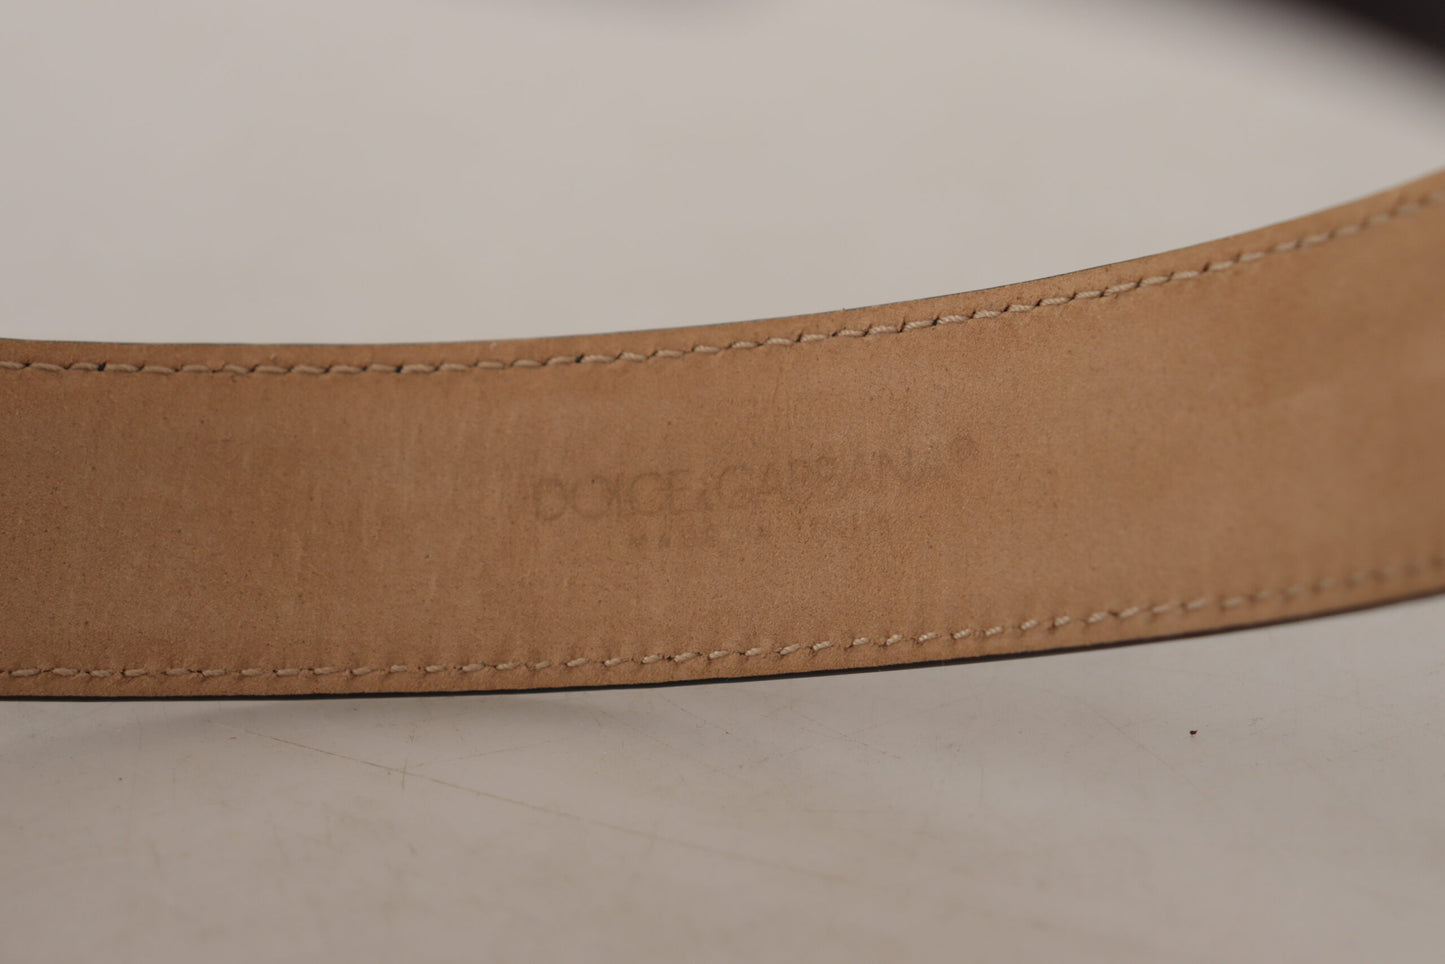 Dolce &amp; Gabbana Black Solid Leather Classic Gold Waist Buckle Belt